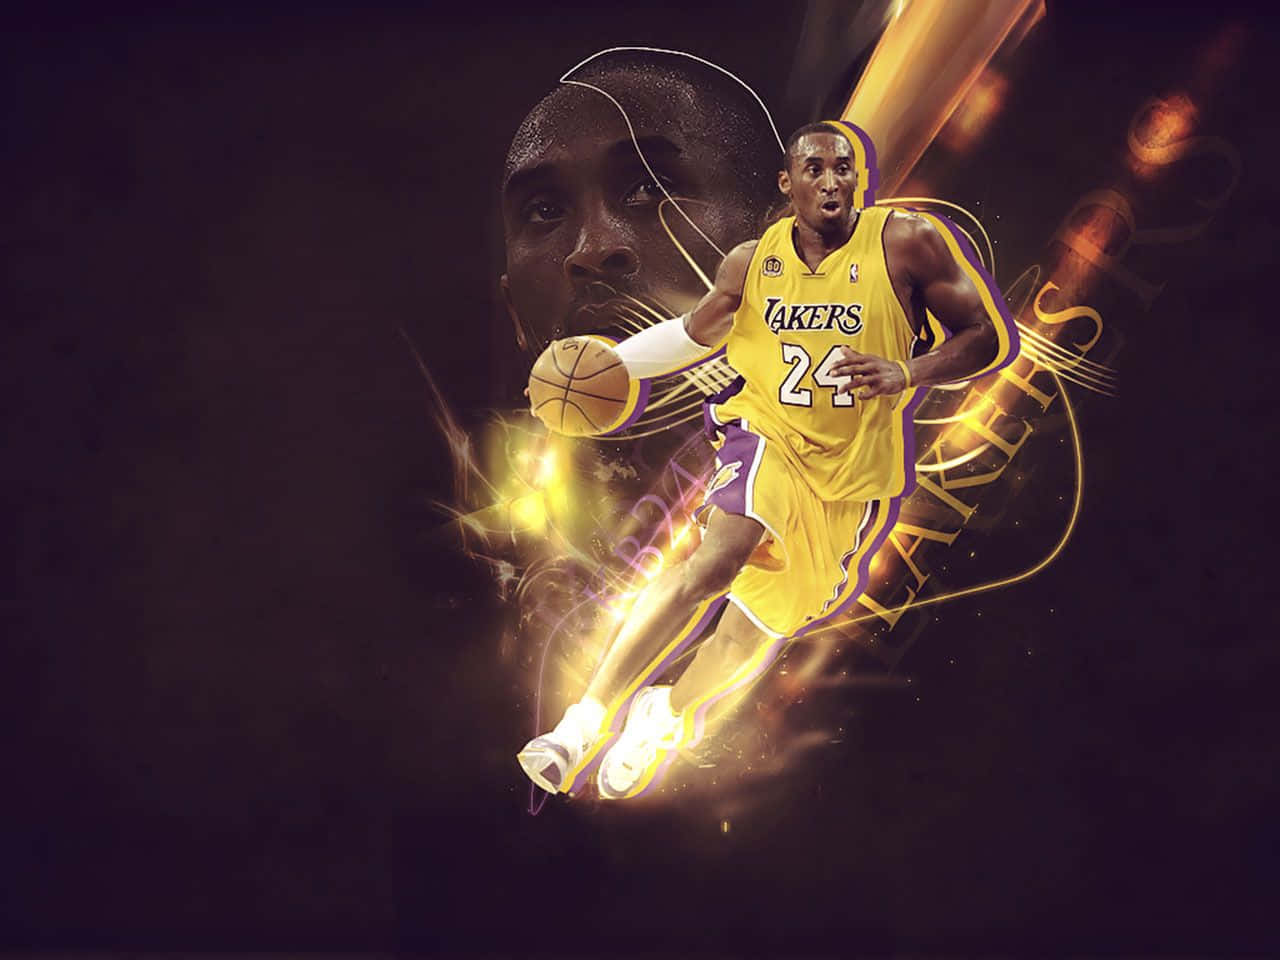 Jugadorde Baloncesto Legendario Kobe Bryant